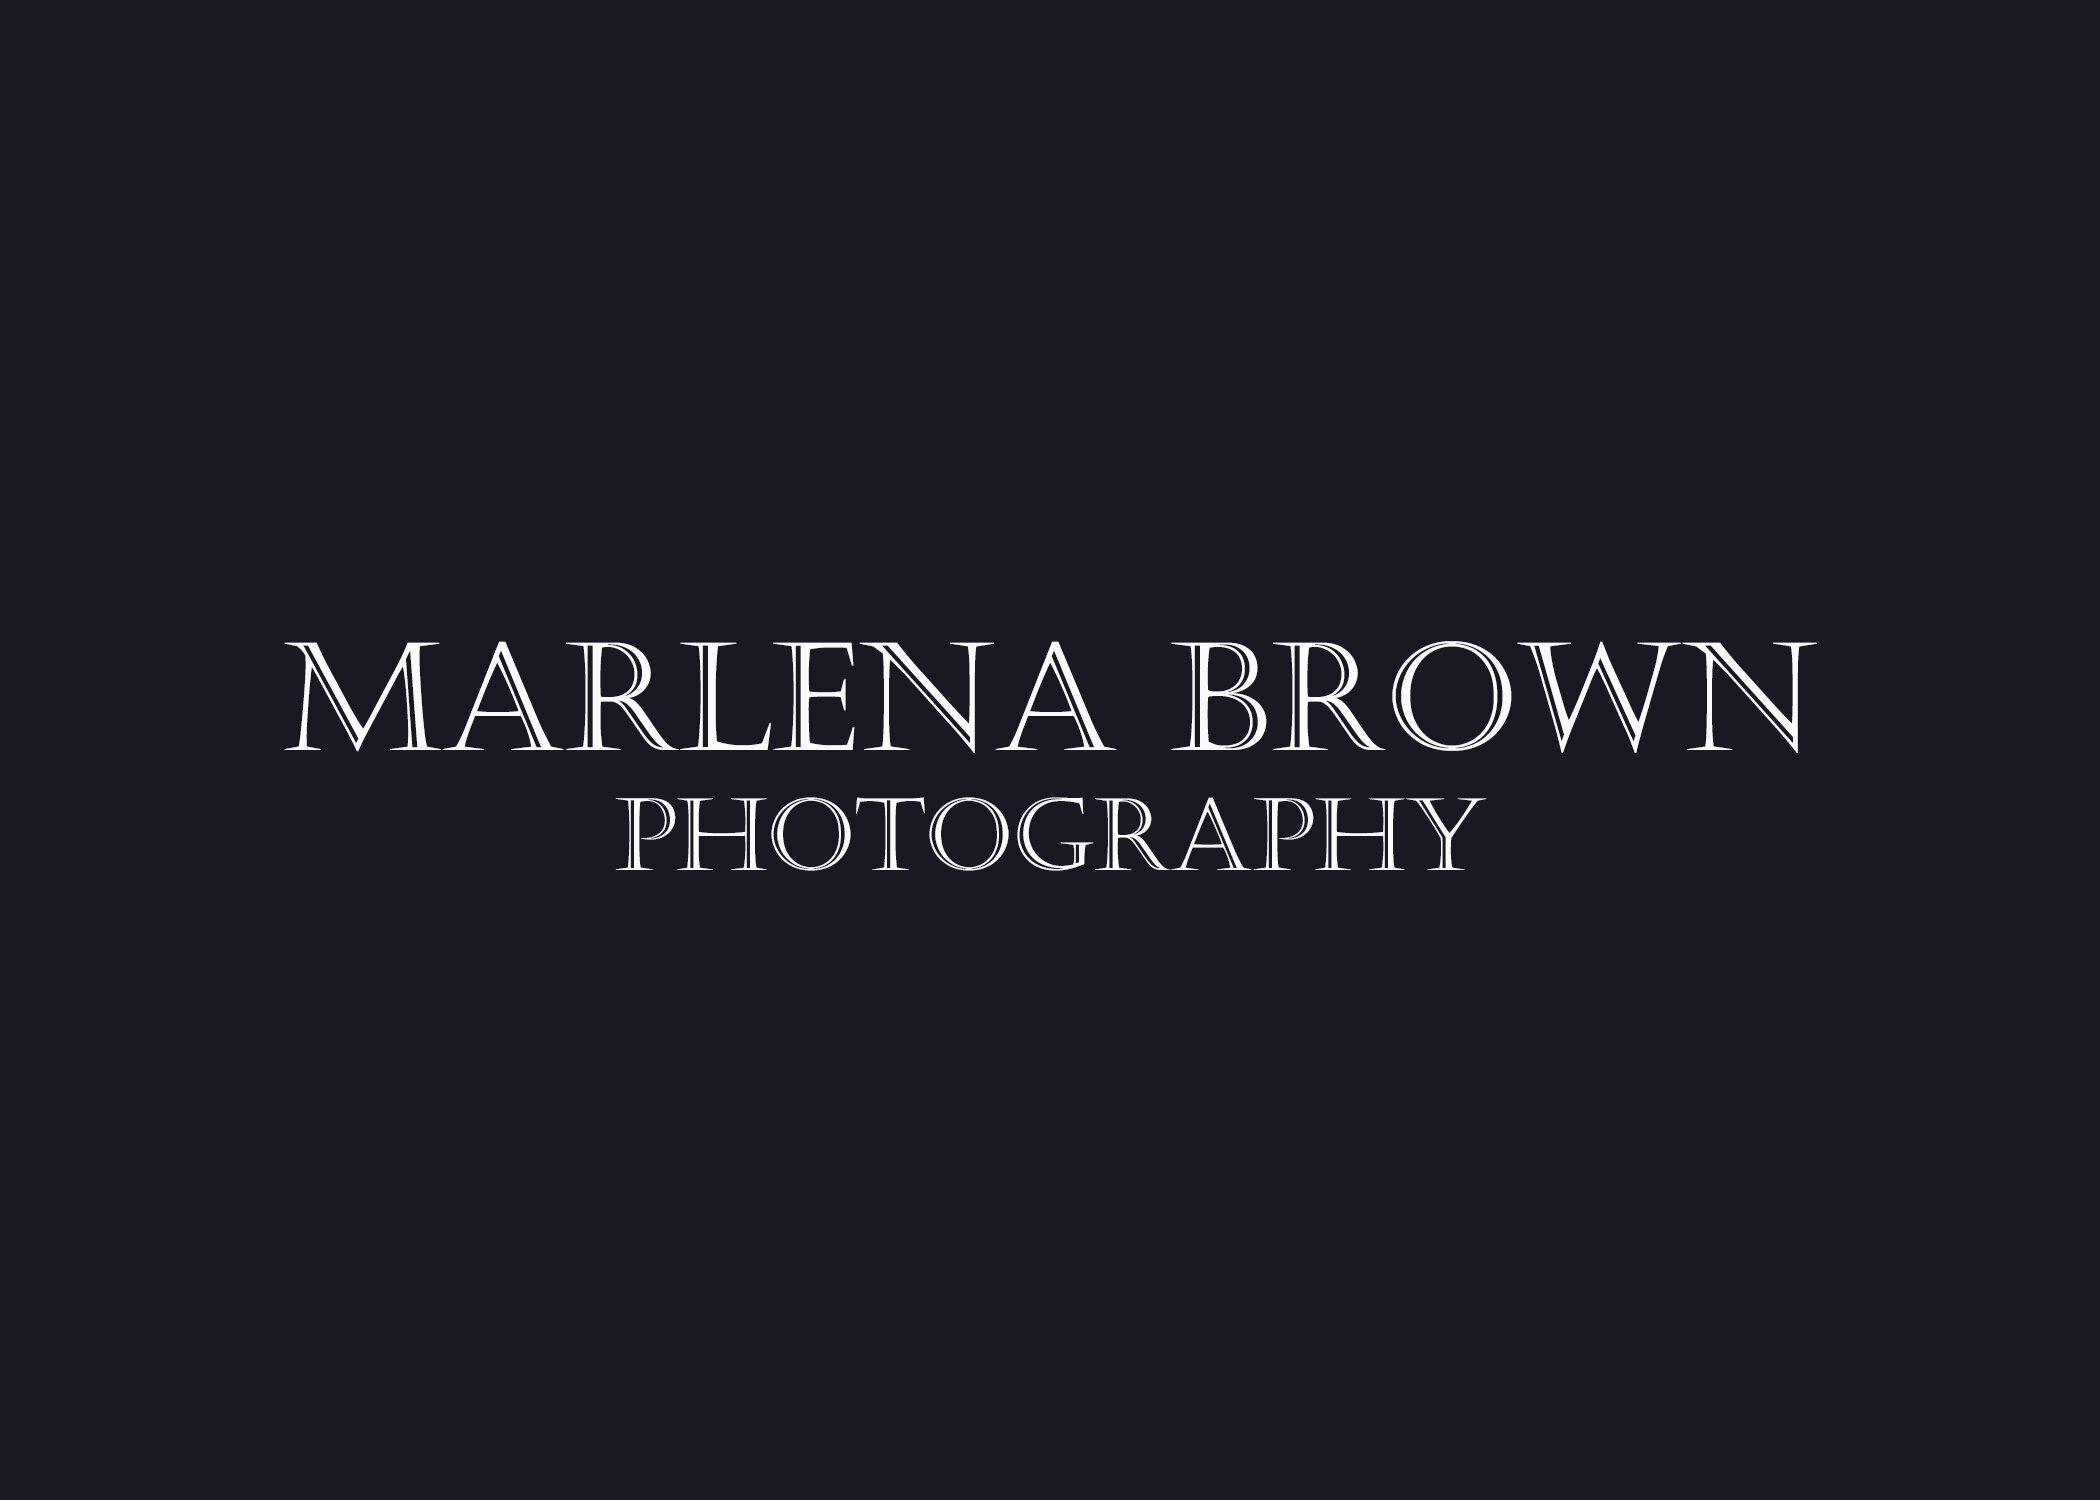 MARLENA BROWN PHOTOGRAPHY